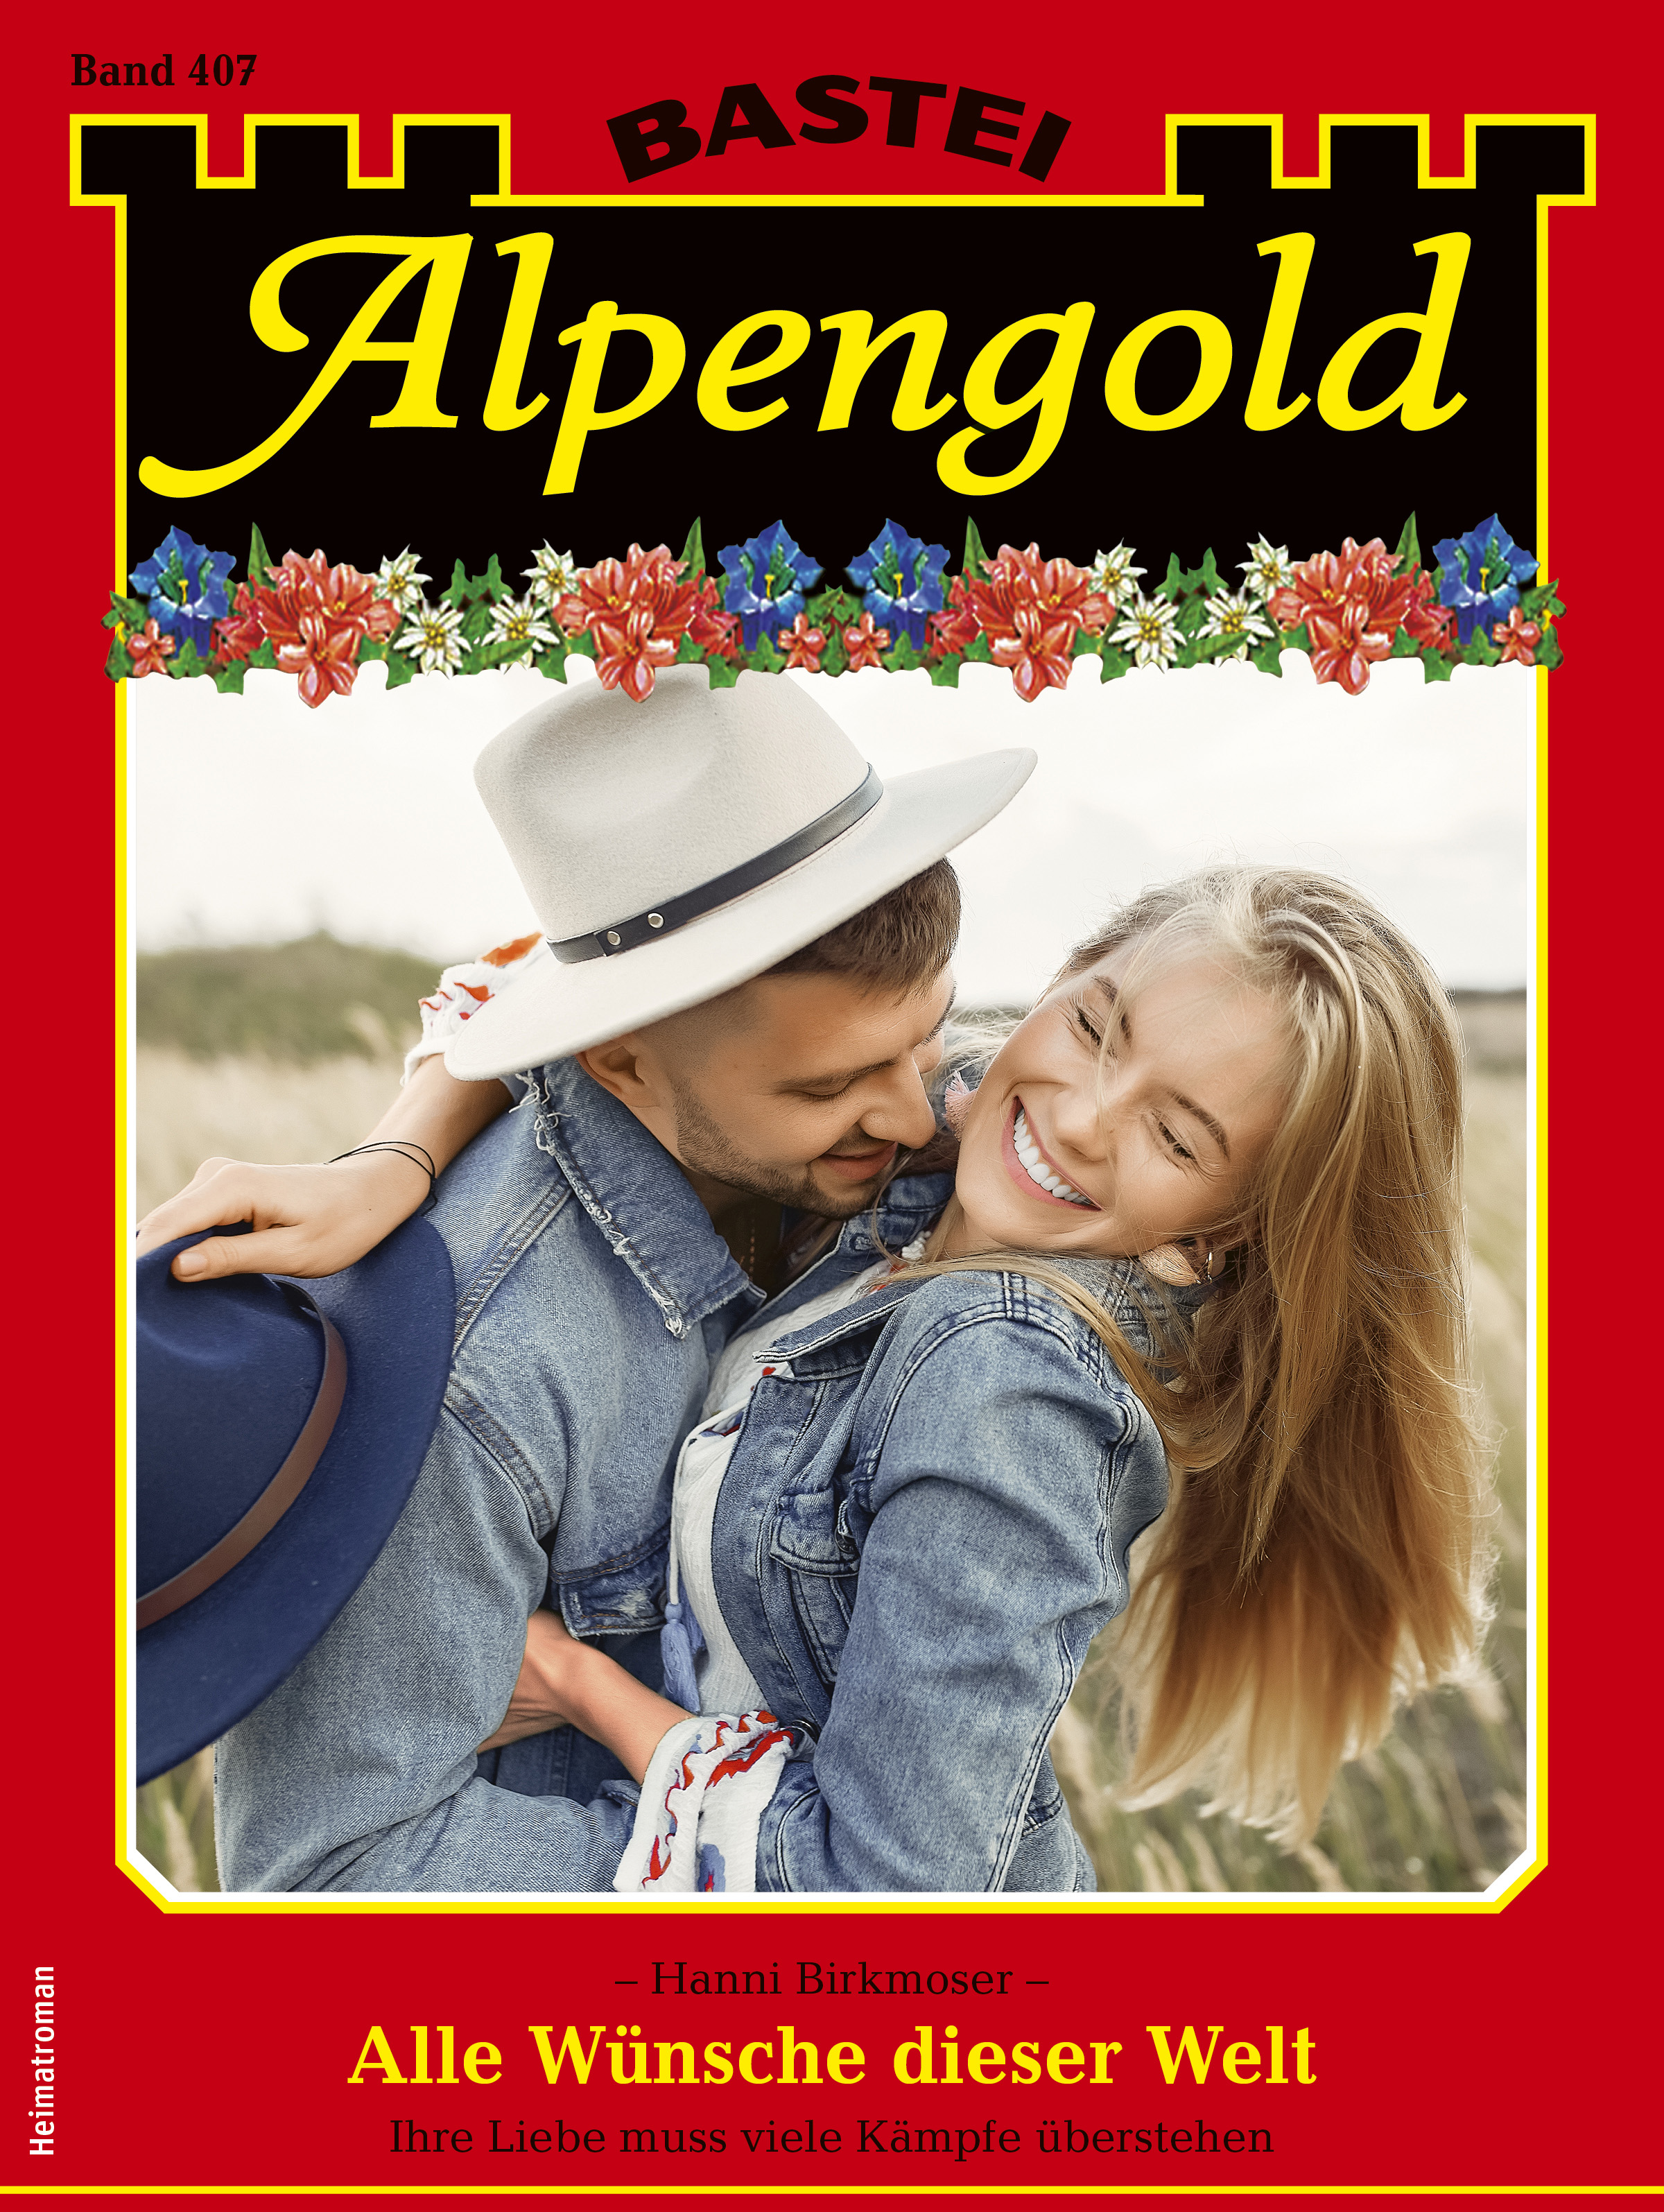 Alpengold